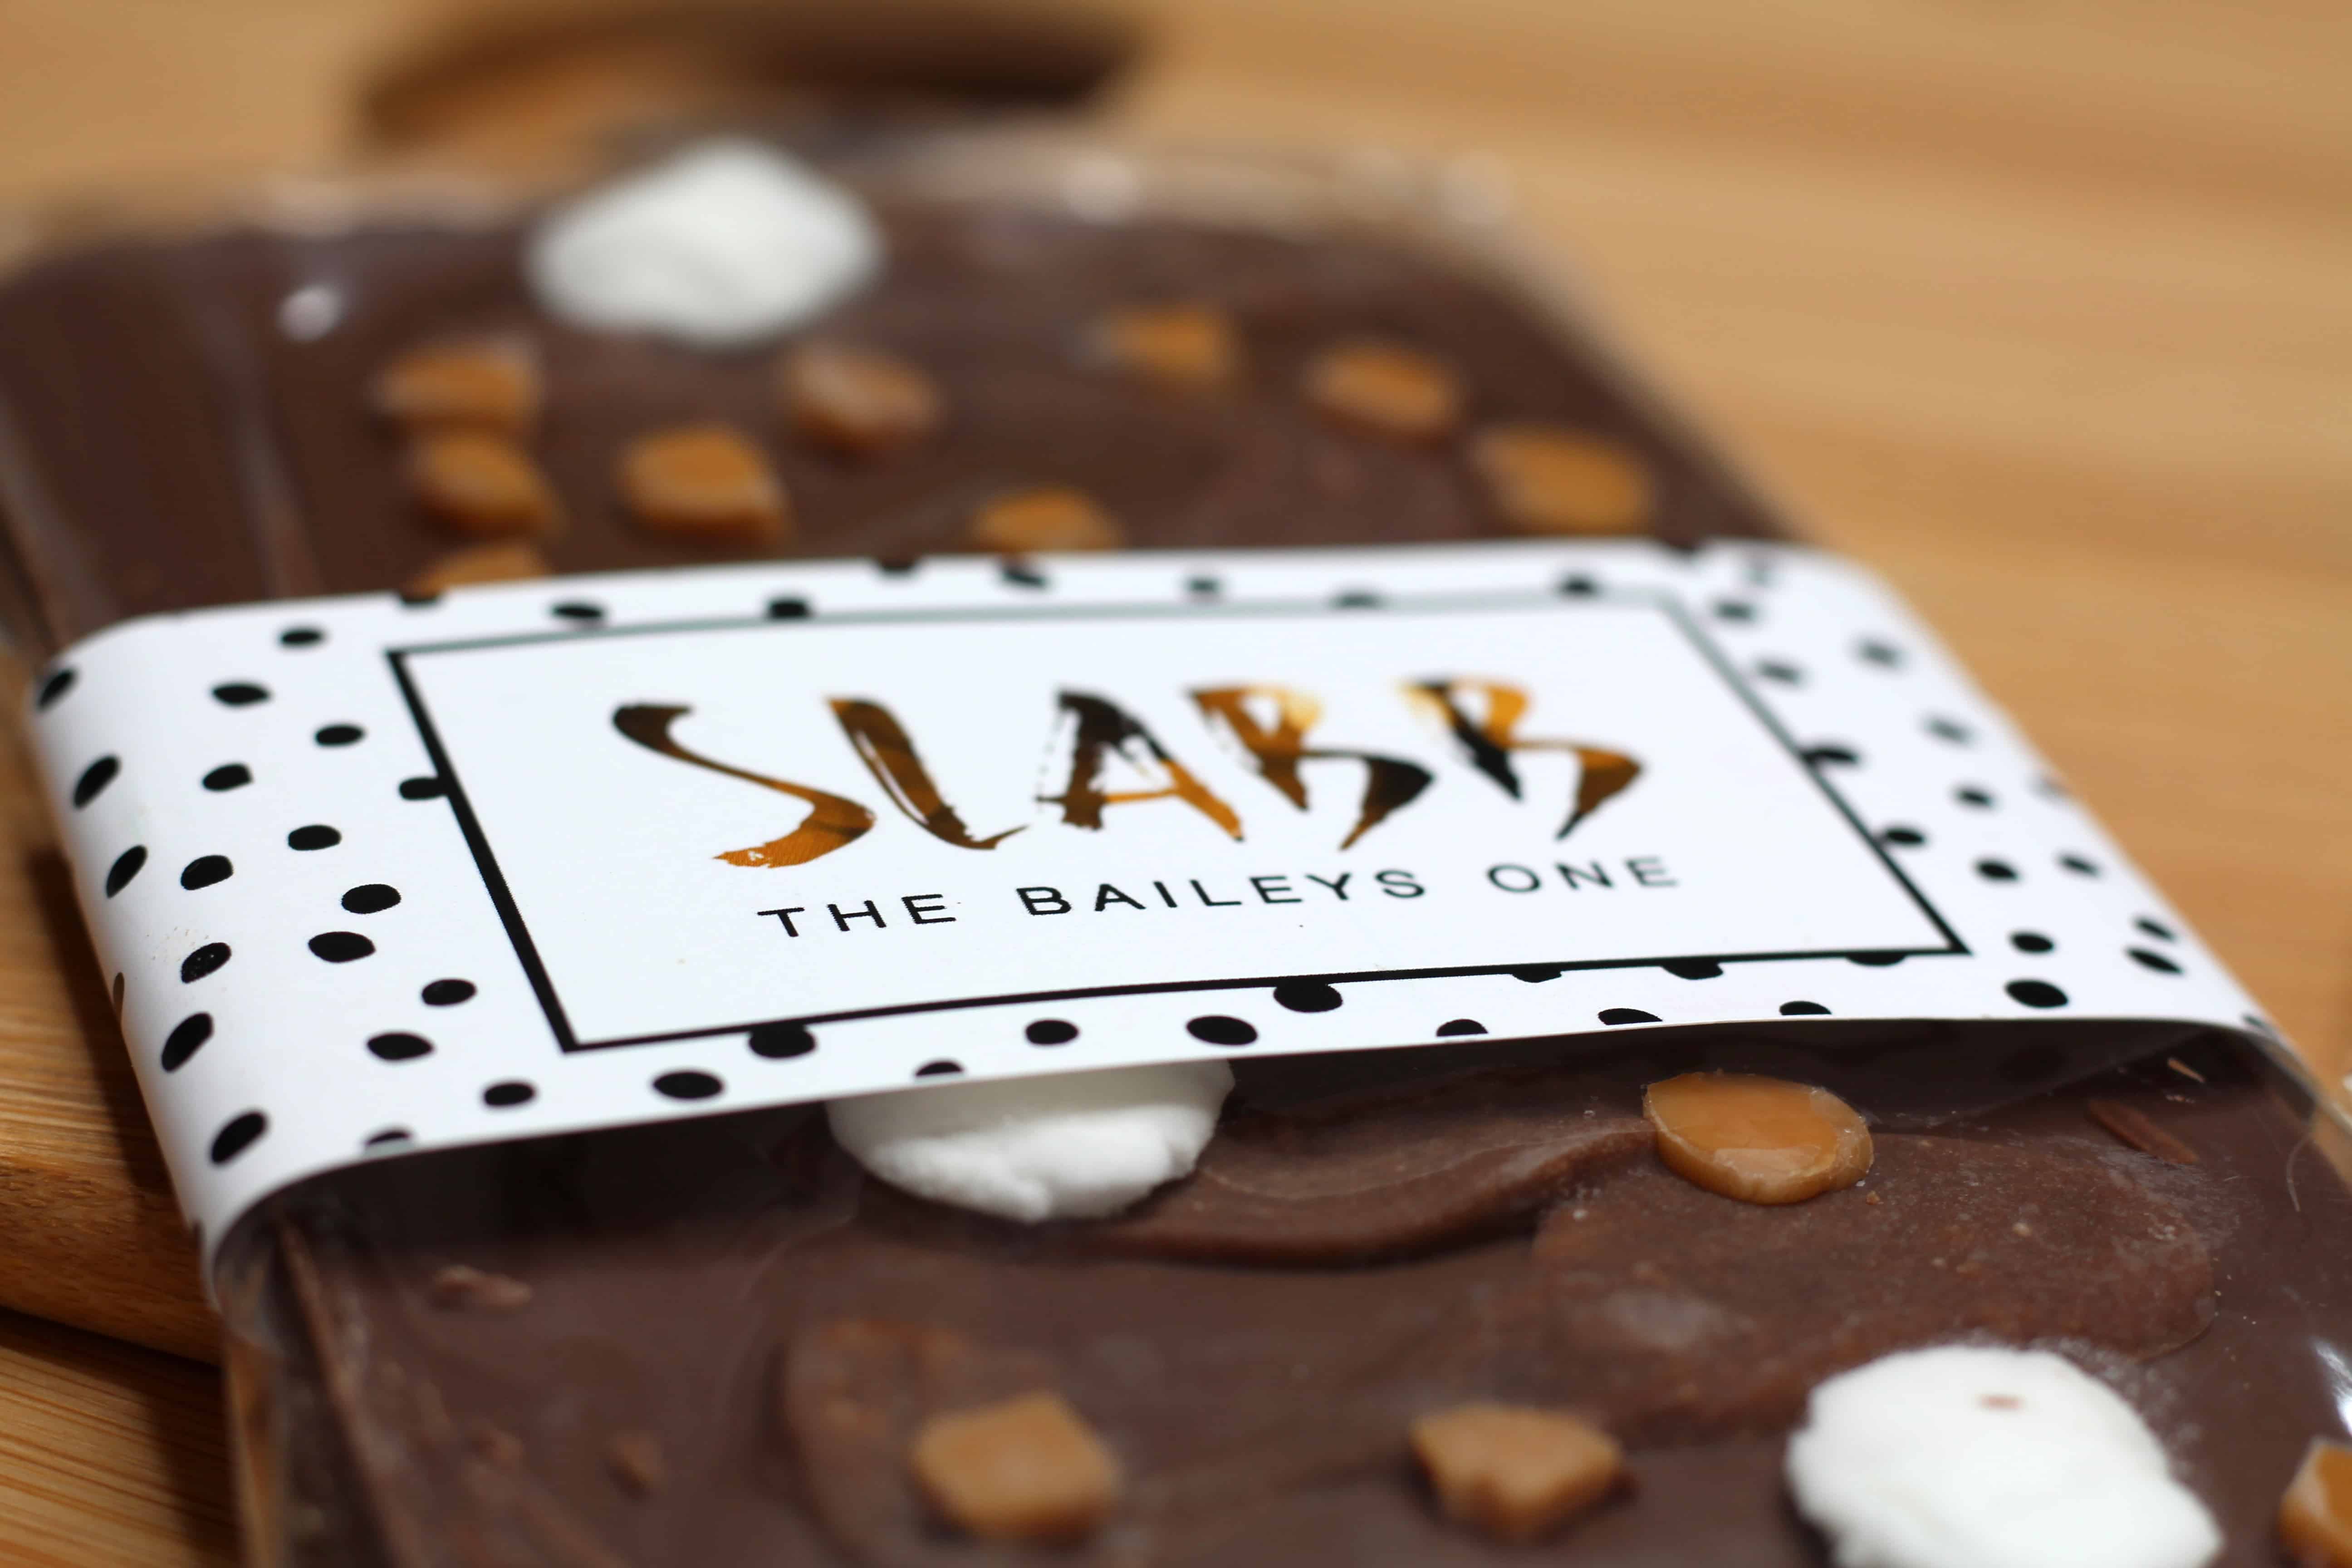 Dark Chocolate – THE SLABB